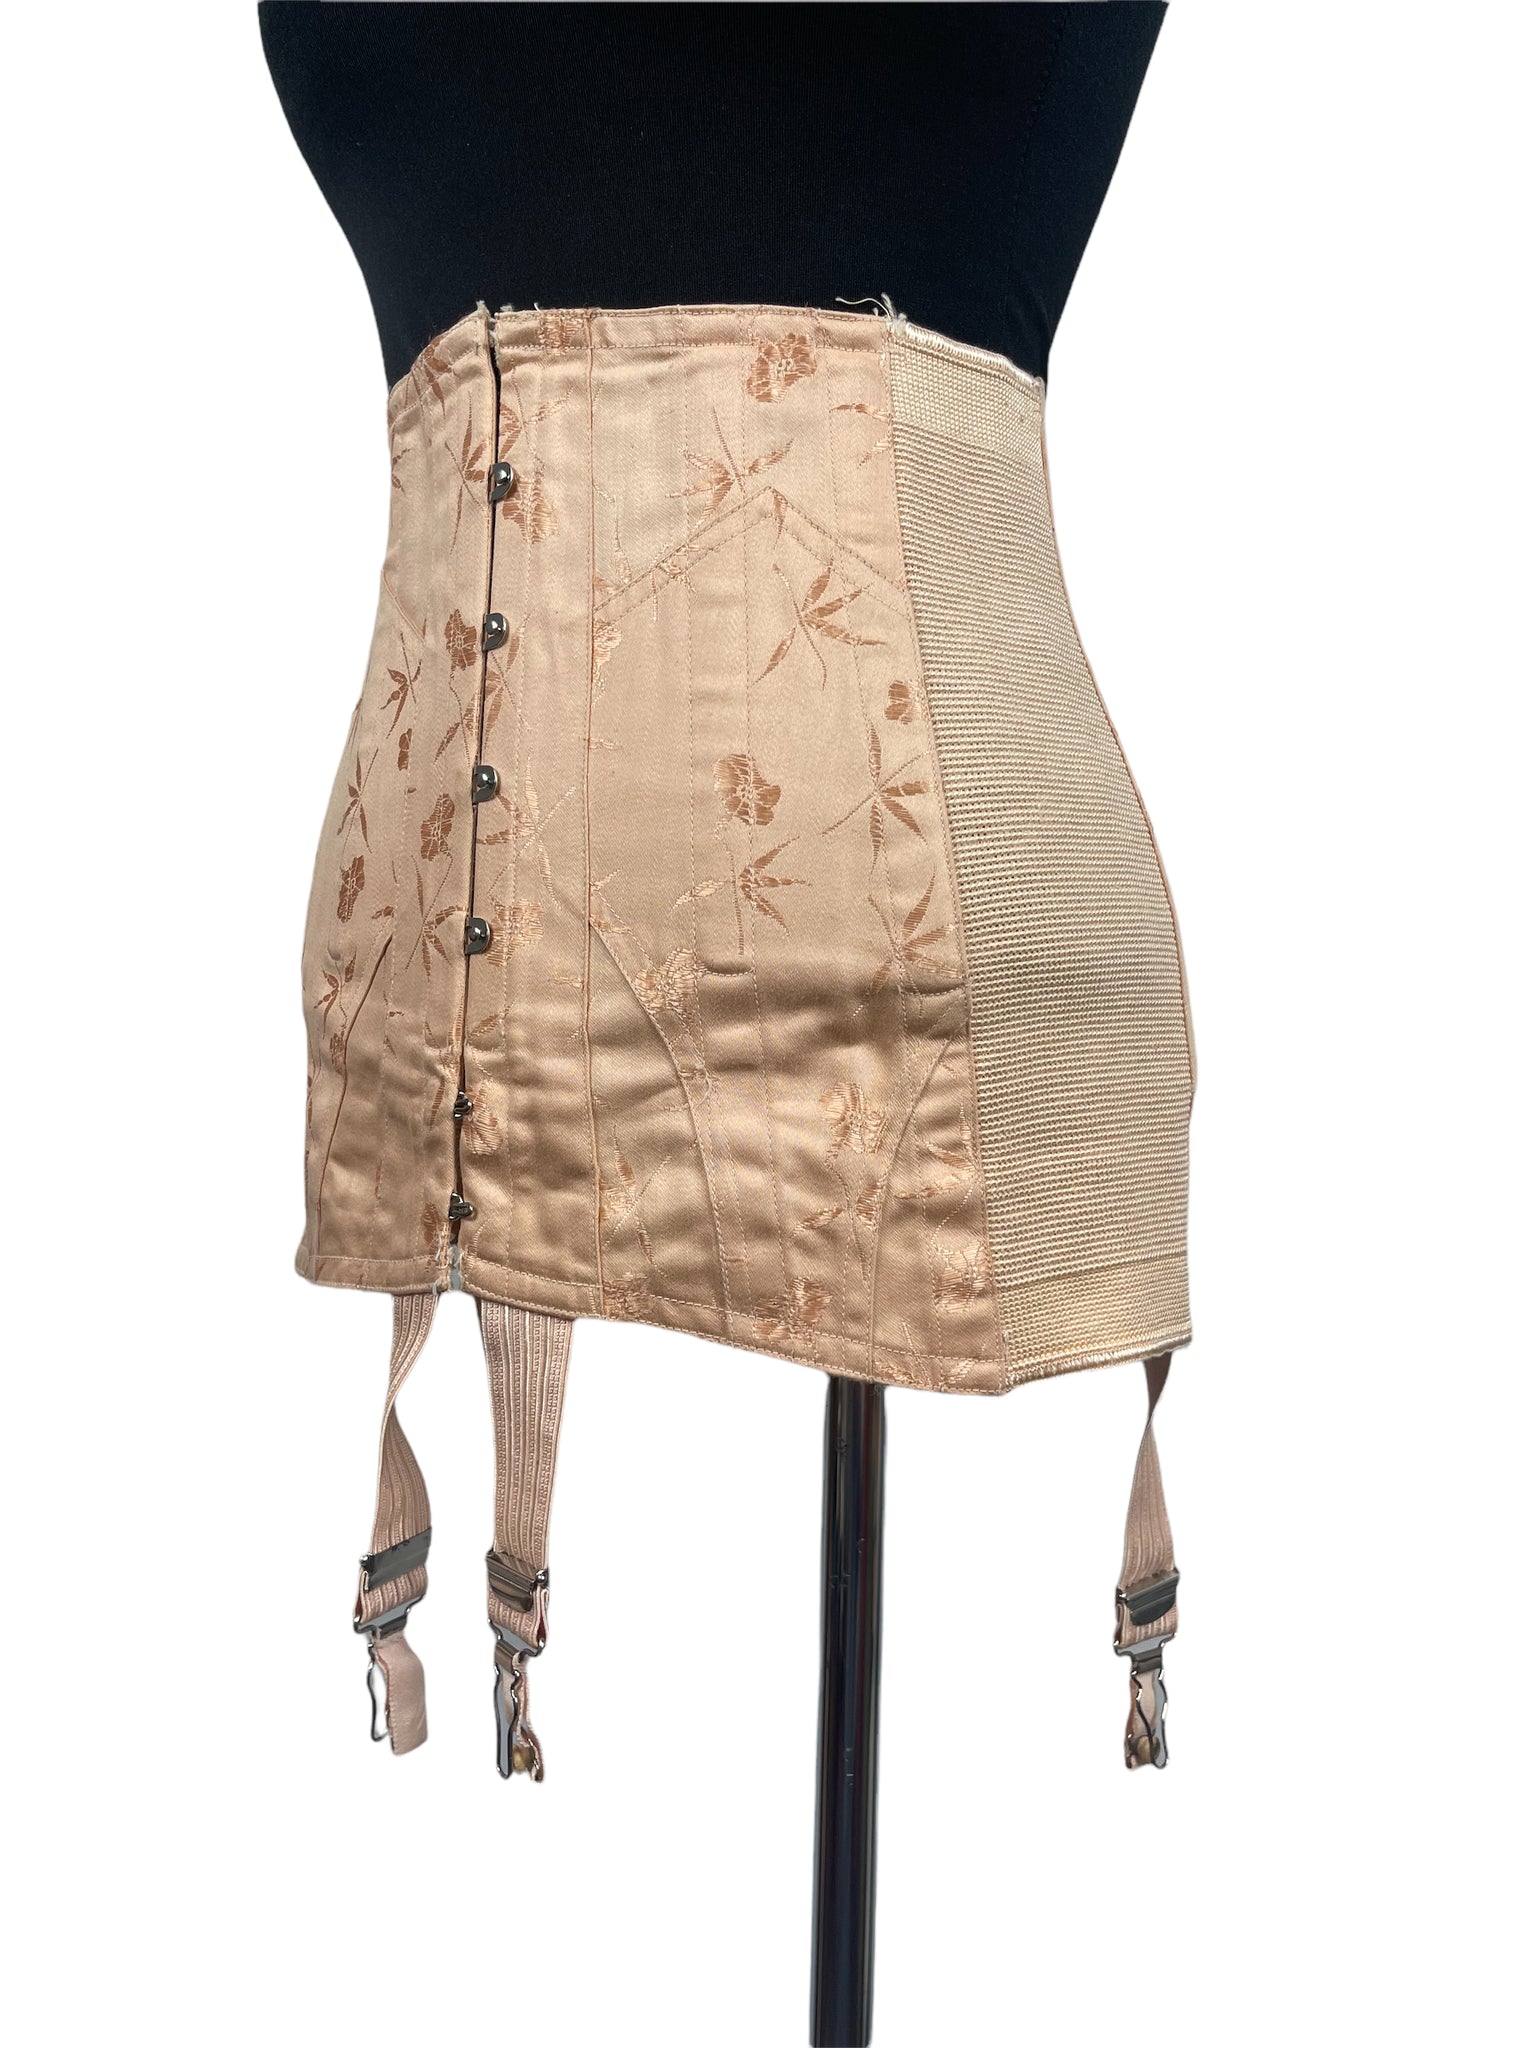 Vintage 1950s Corset Girdle Waist Trainer Boned Suspenders Firm